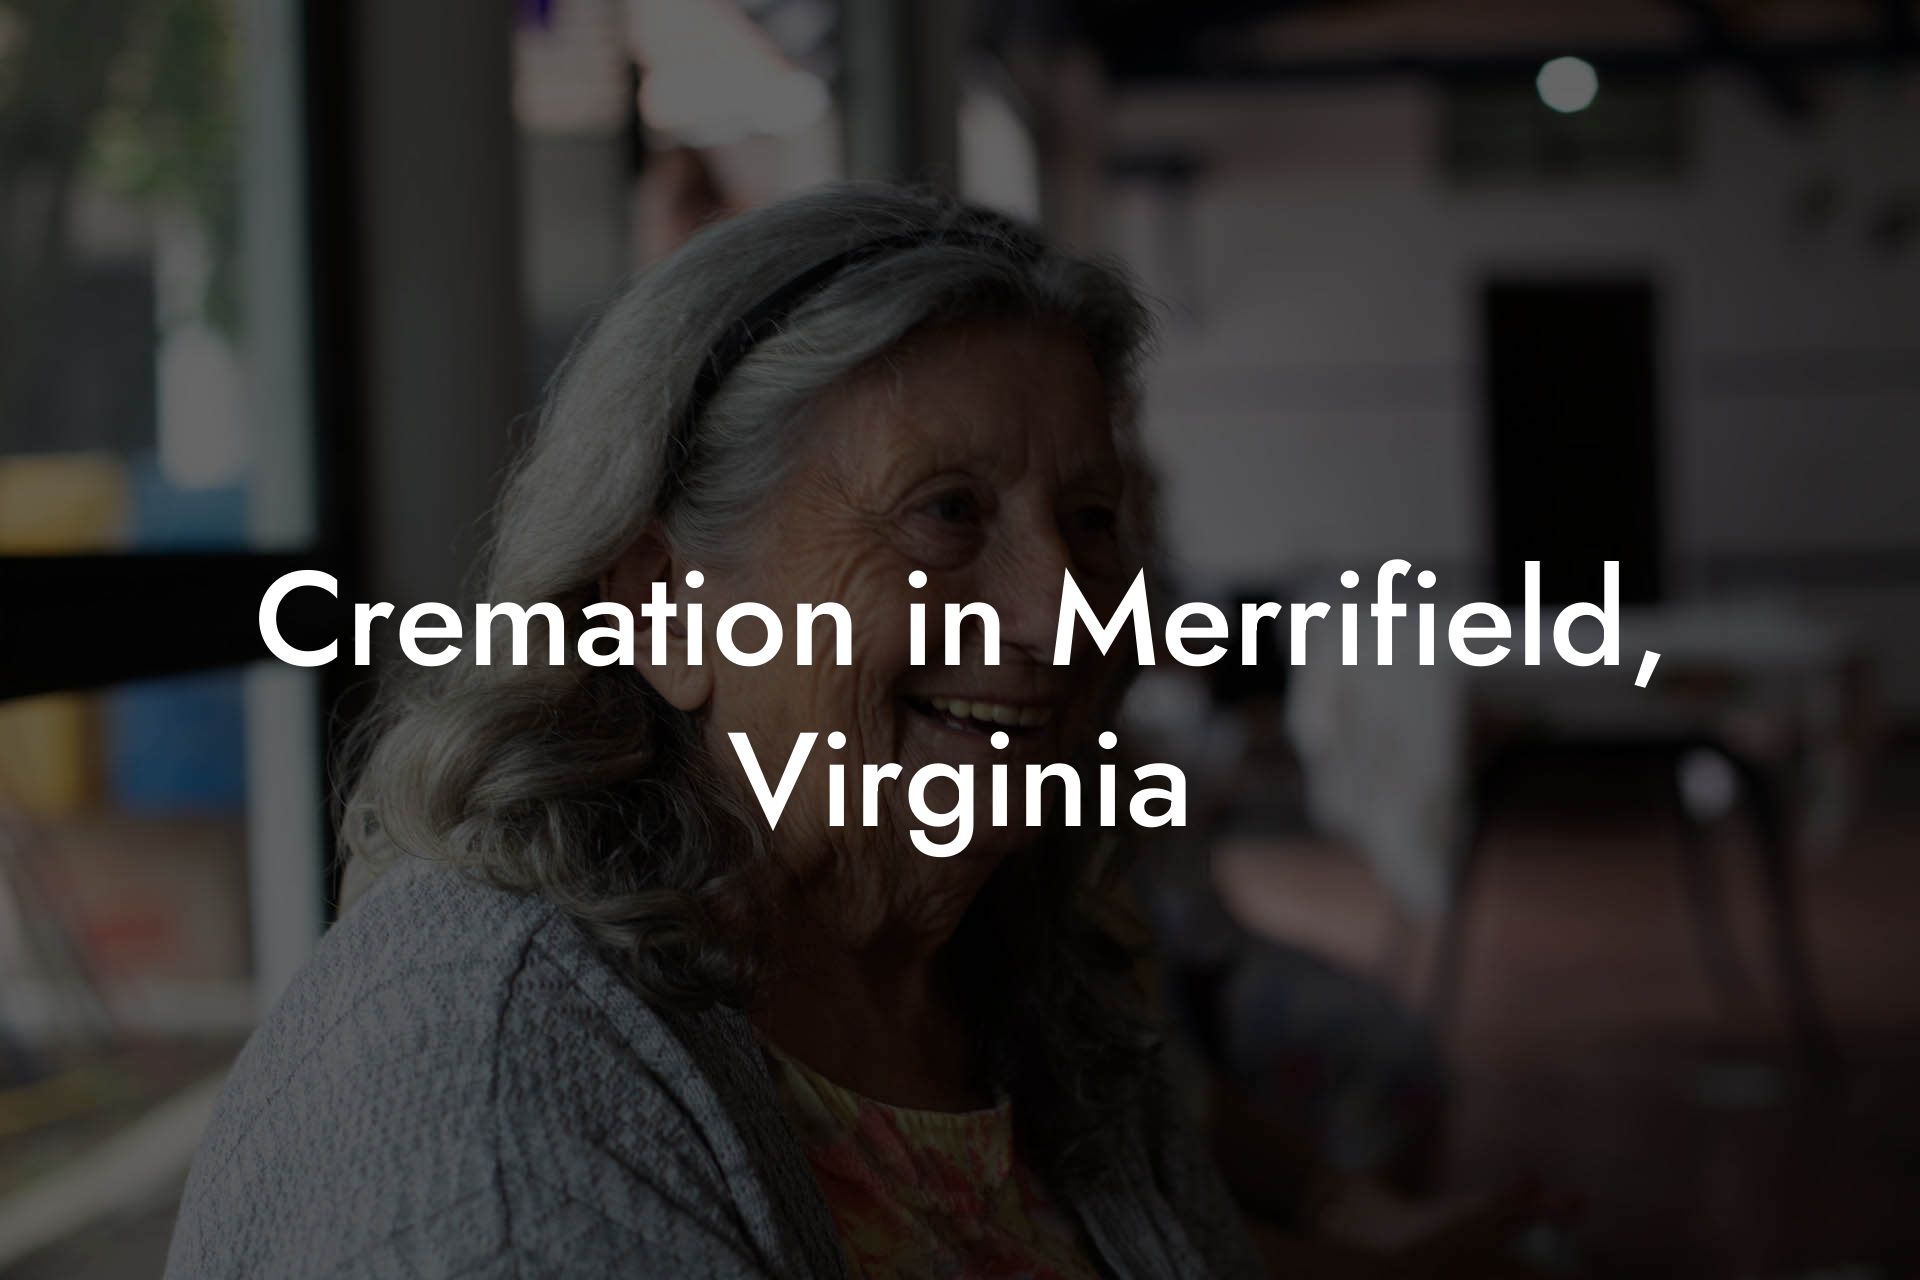 Cremation in Merrifield, Virginia